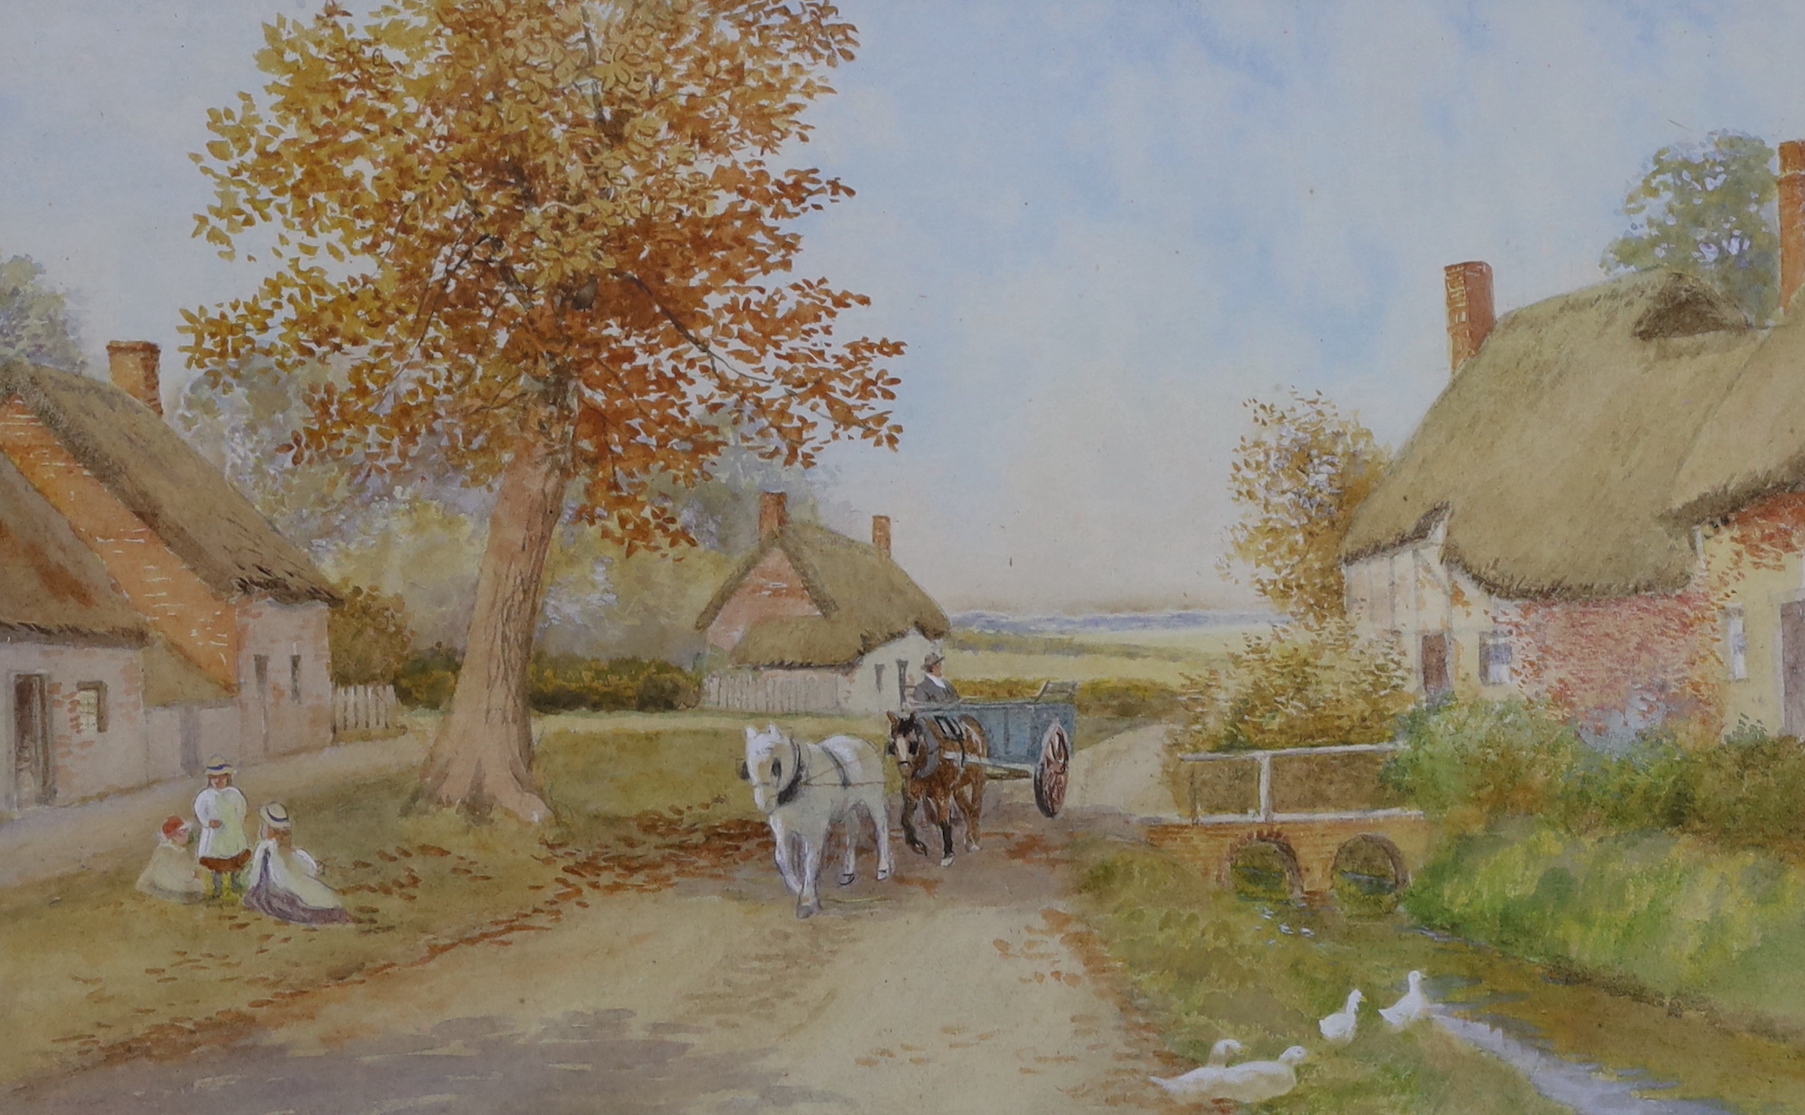 Robert Hollands Walker (fl.1882-1920) pair of heightened watercolours, village street scenes, signed, 20 x 32cm